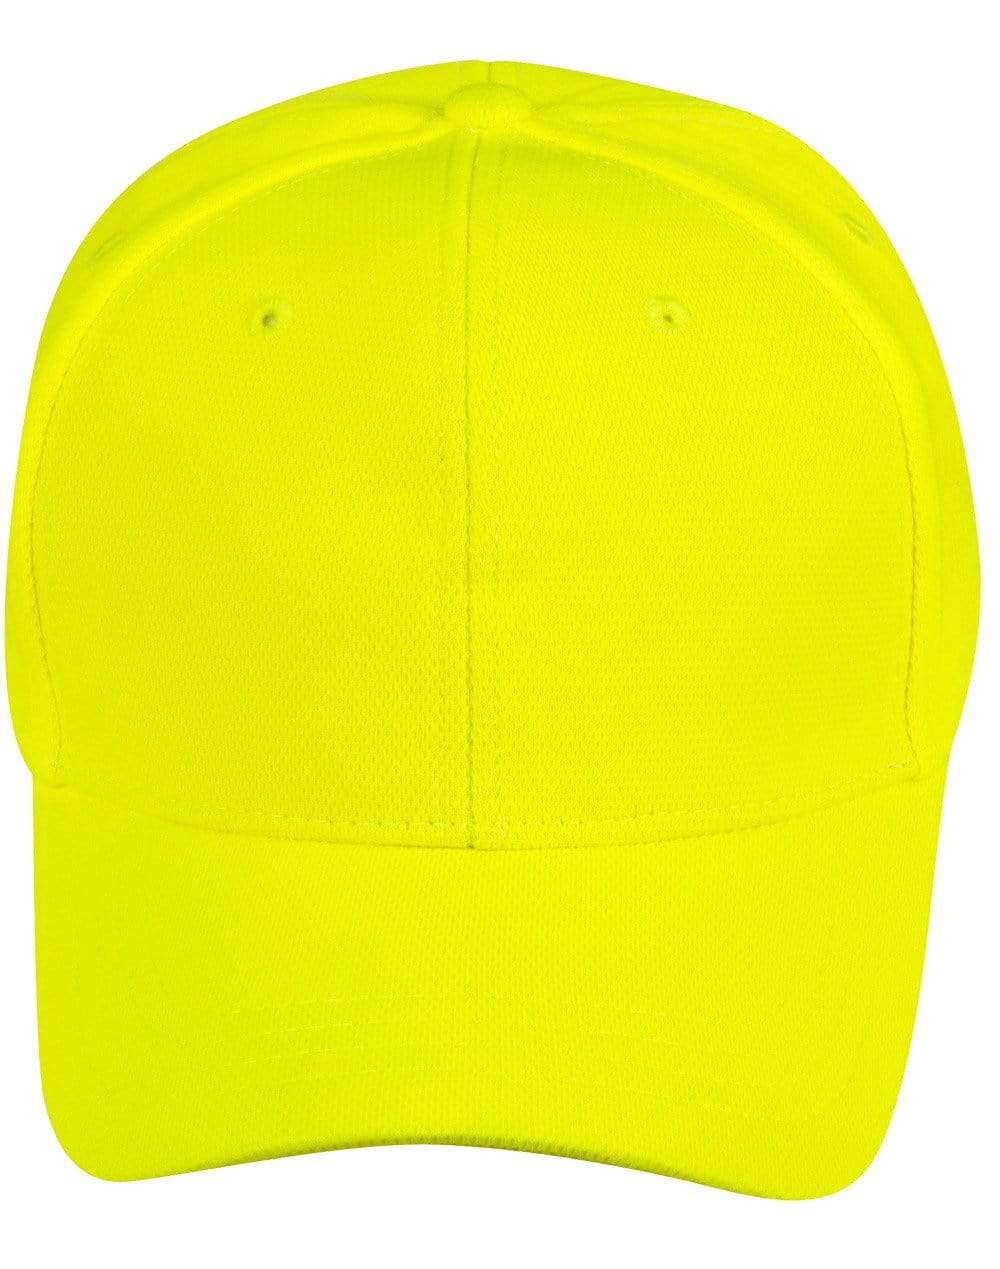 Pique Mesh Cap CH77 Active Wear Australian Industrial Wear Fluoro/Yellow One size 